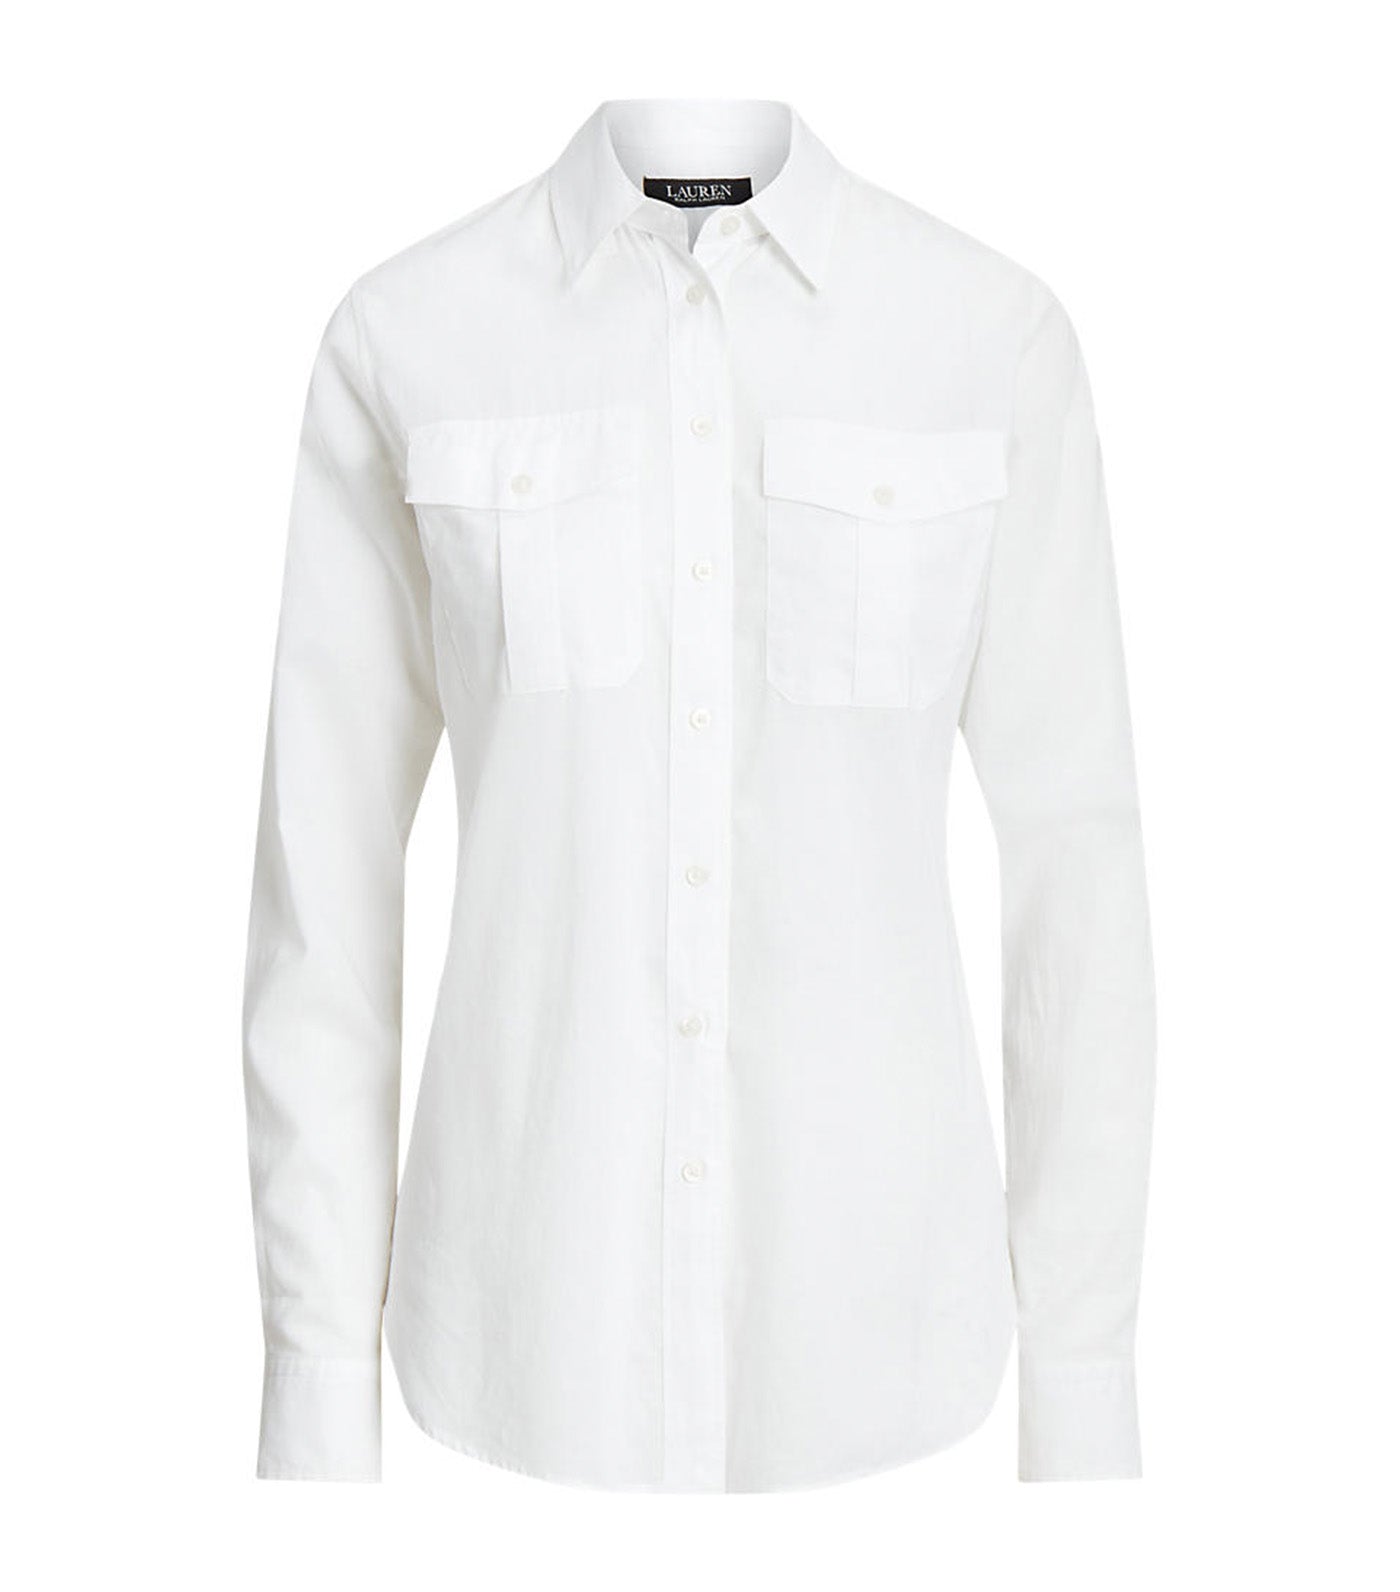 Women's Cotton Voile Shirt White